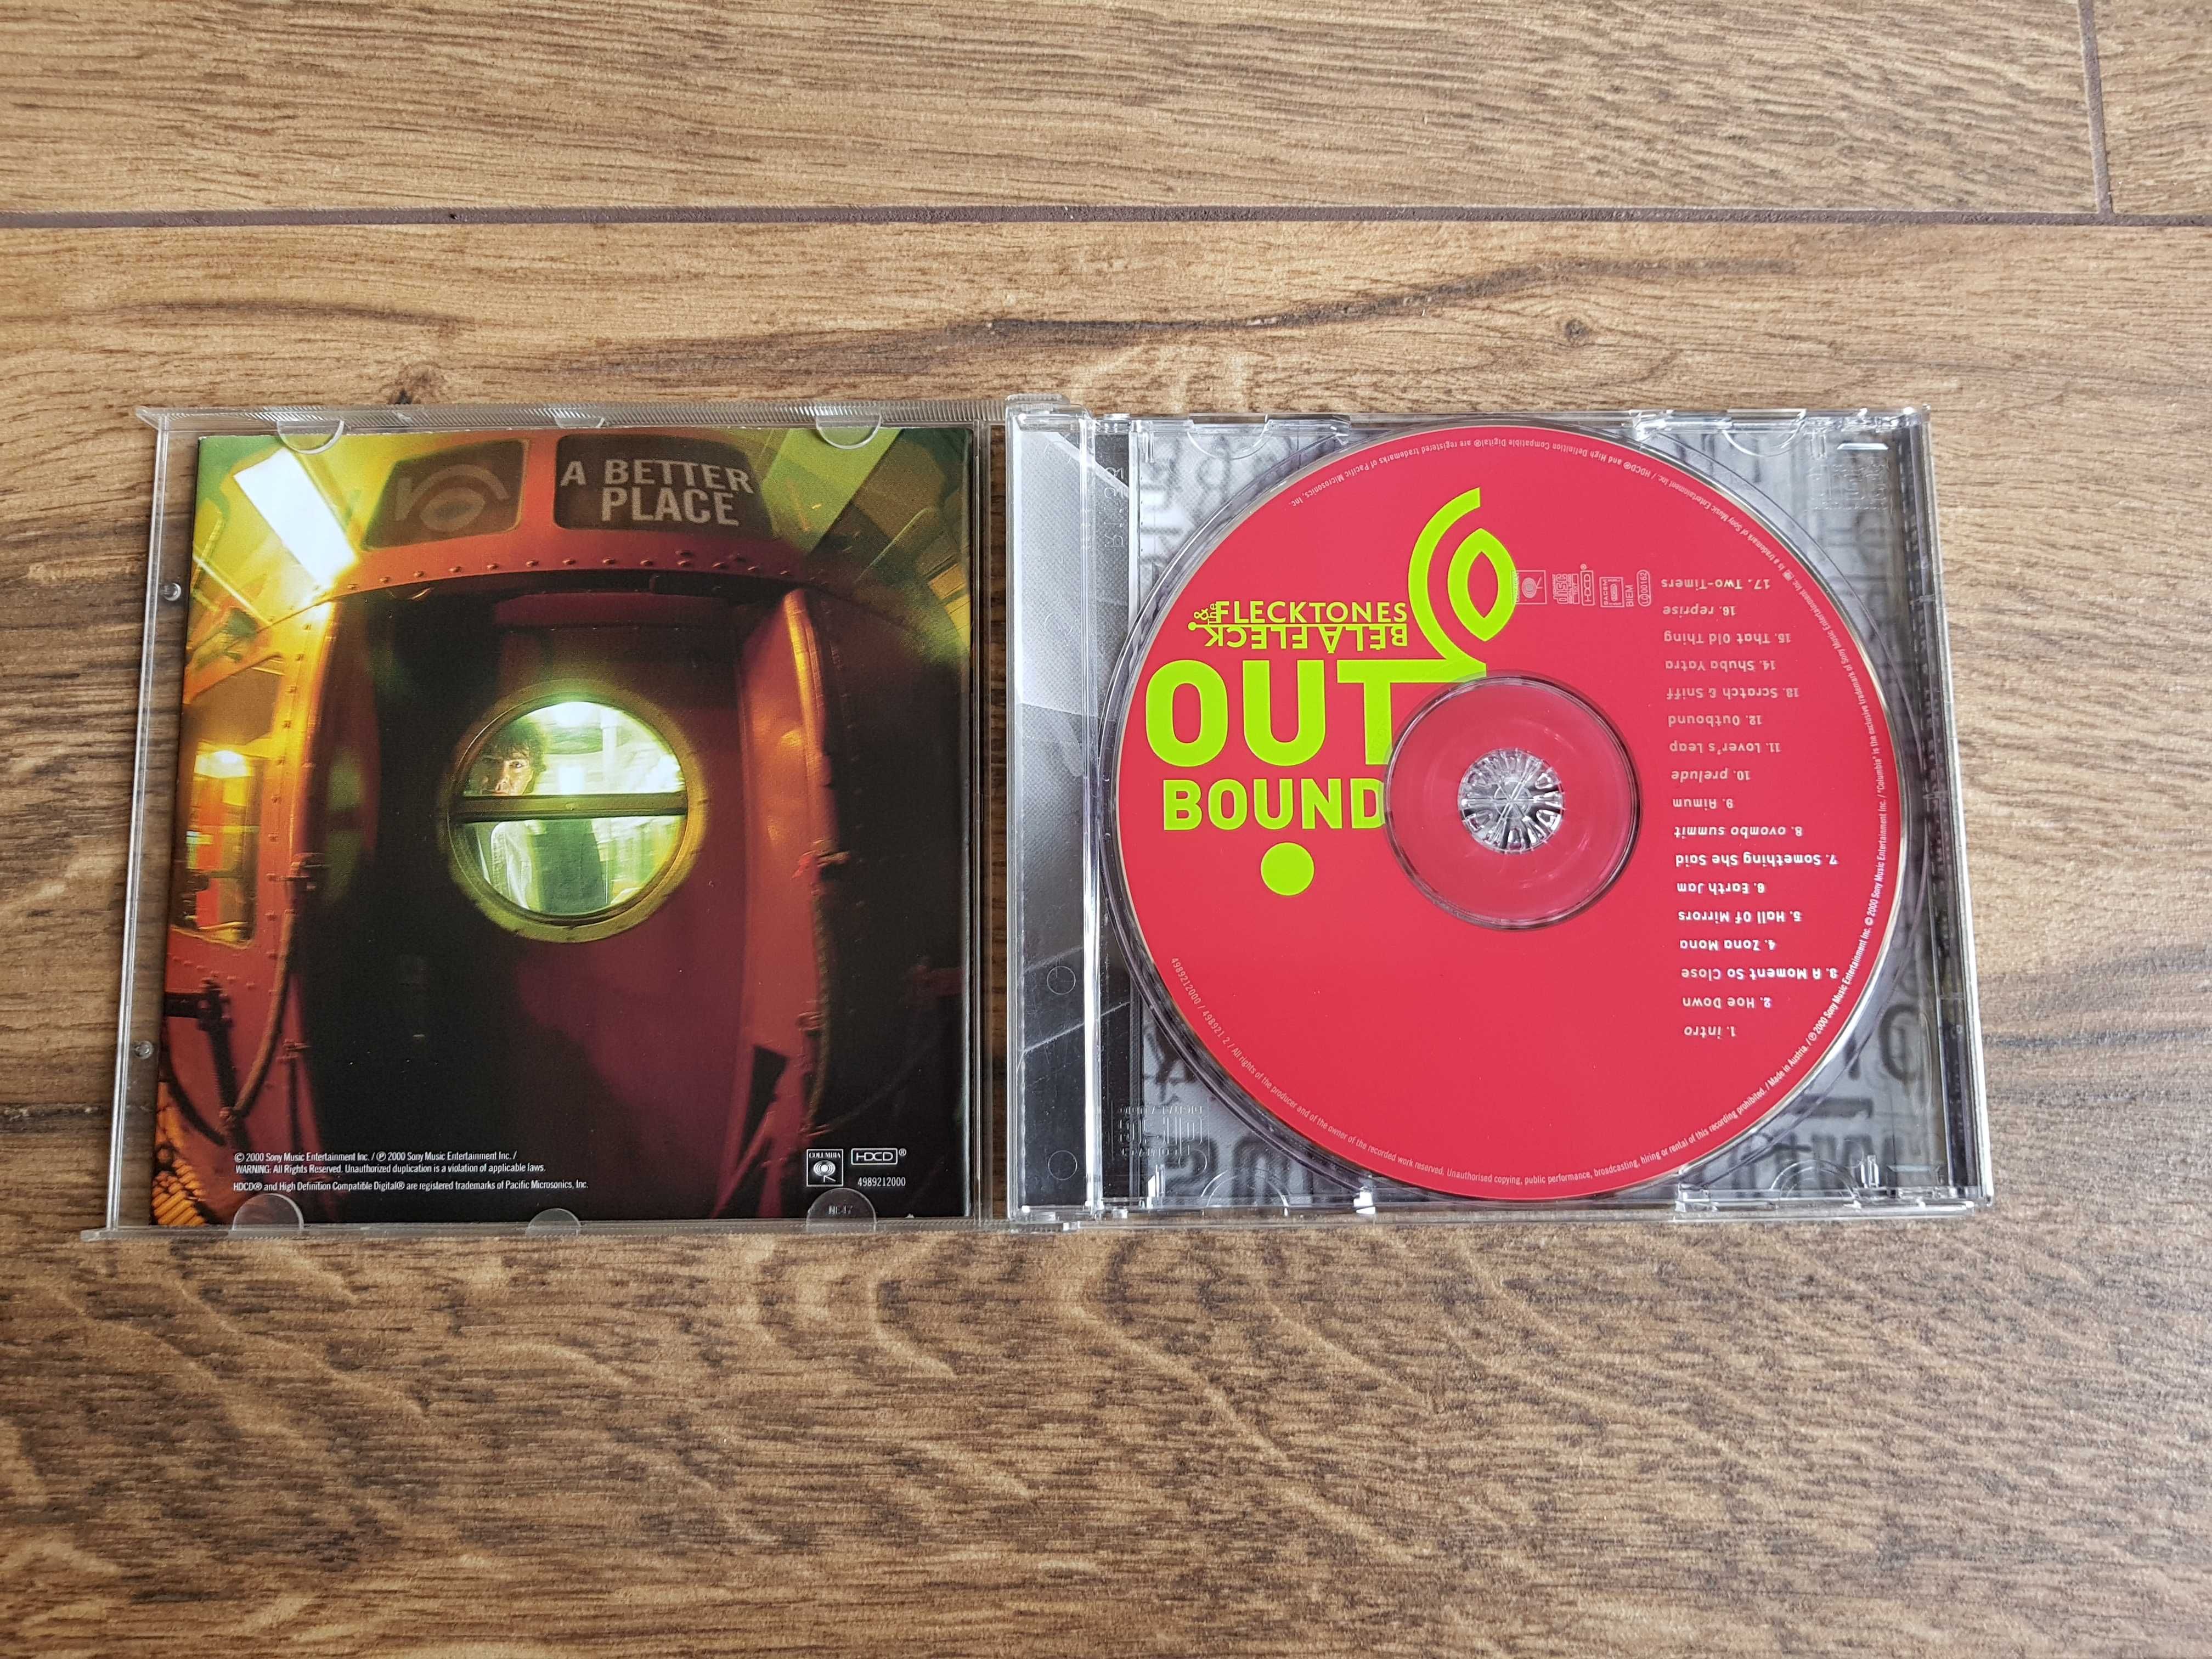 płyta CD: Bela Fleck And The Flecktones : Outbound